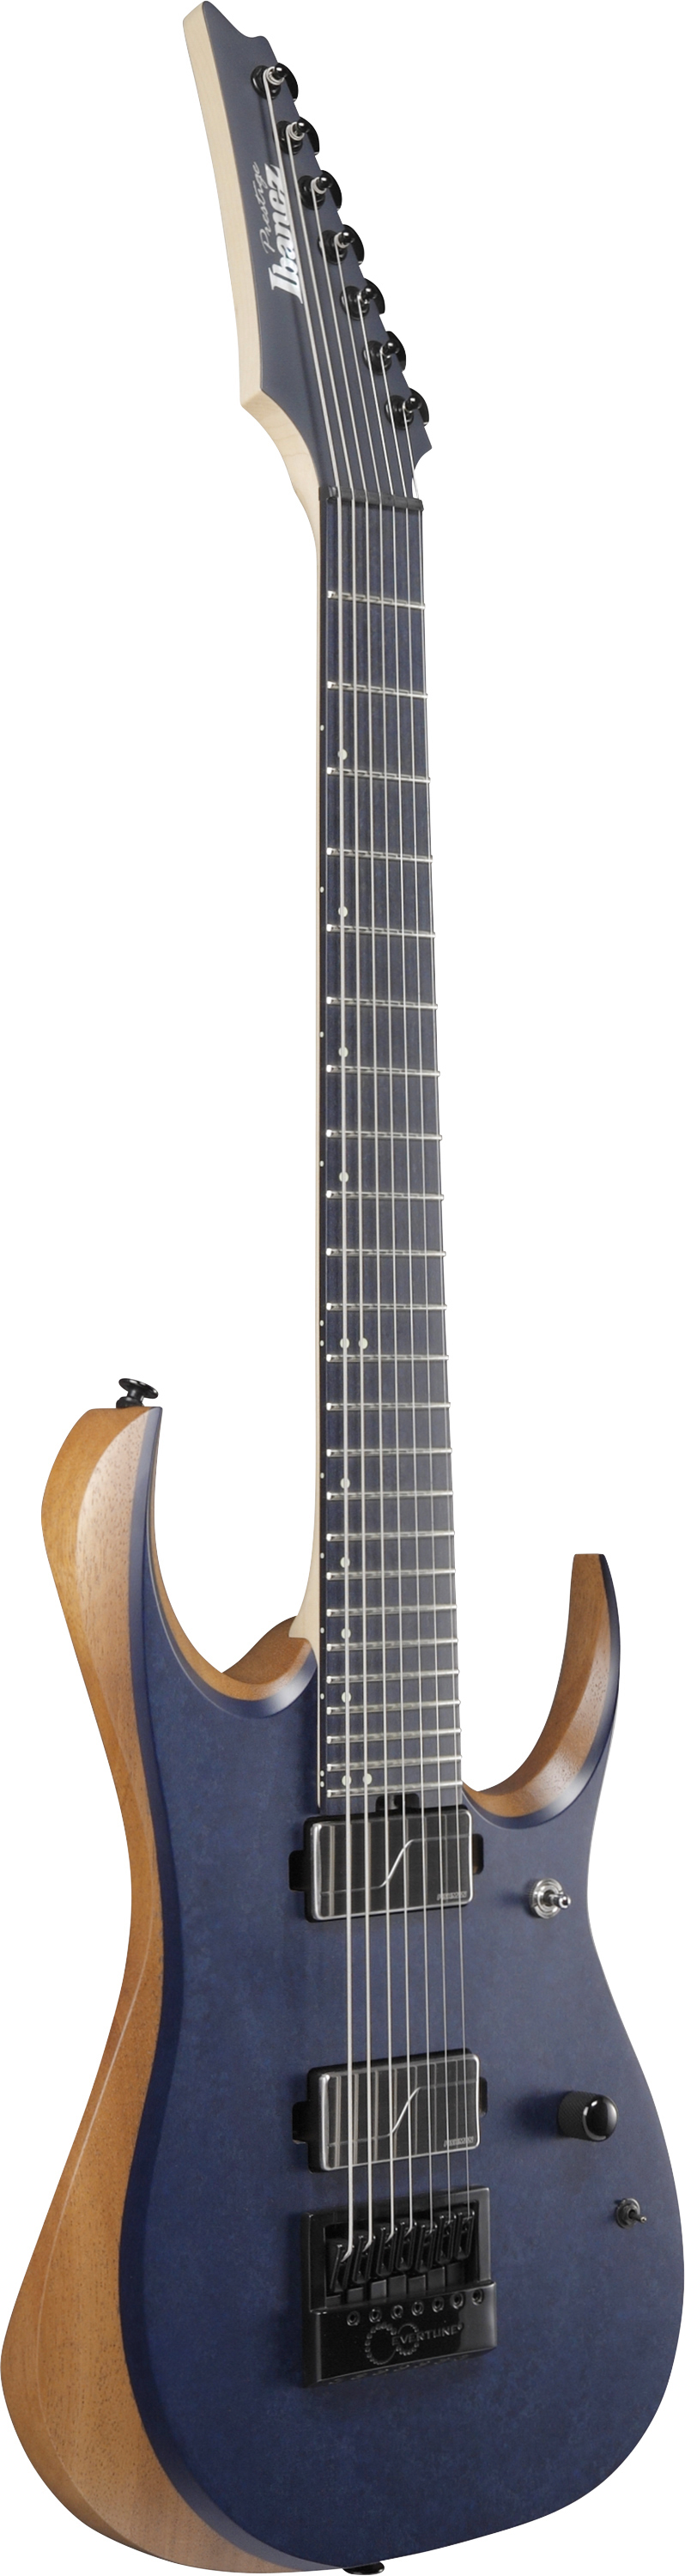 Ibanez Rgdr4527et Prestige Hh Ht Rich - Natural Flat - Guitarra eléctrica con forma de str. - Variation 5